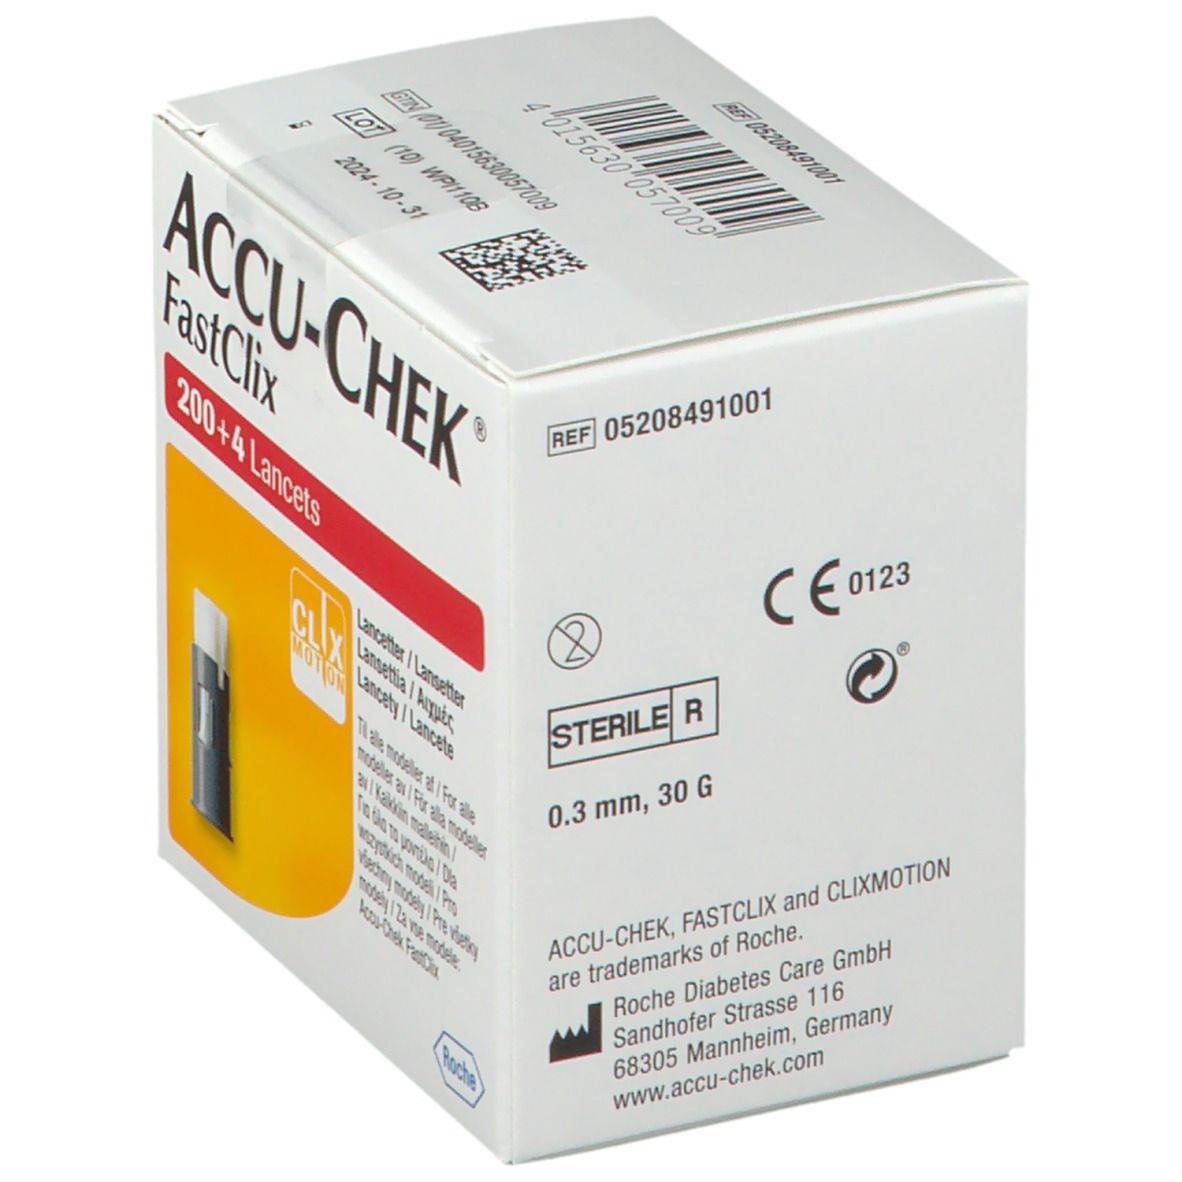 ACCU-CHEK® Fastclix Lancette